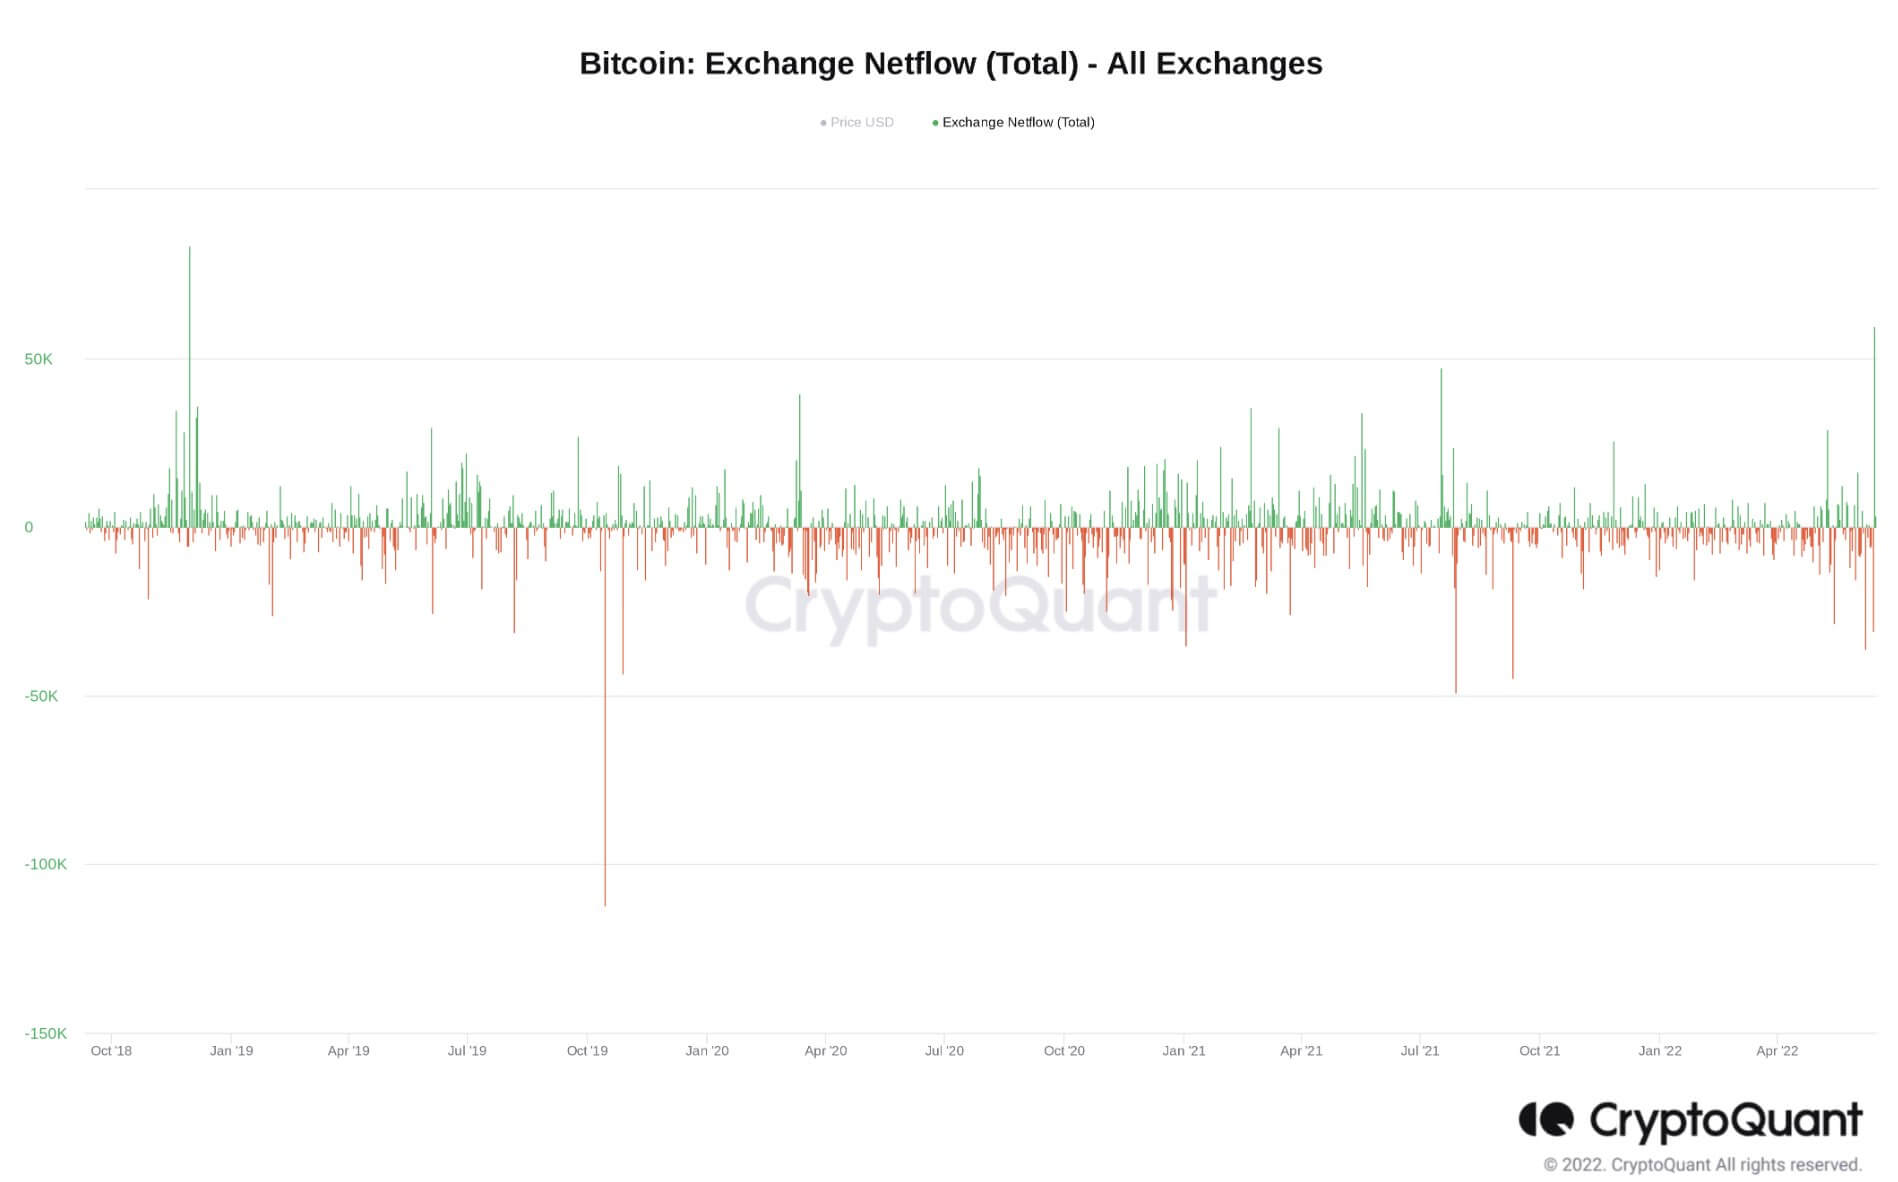 Bitcoin exchange netflows